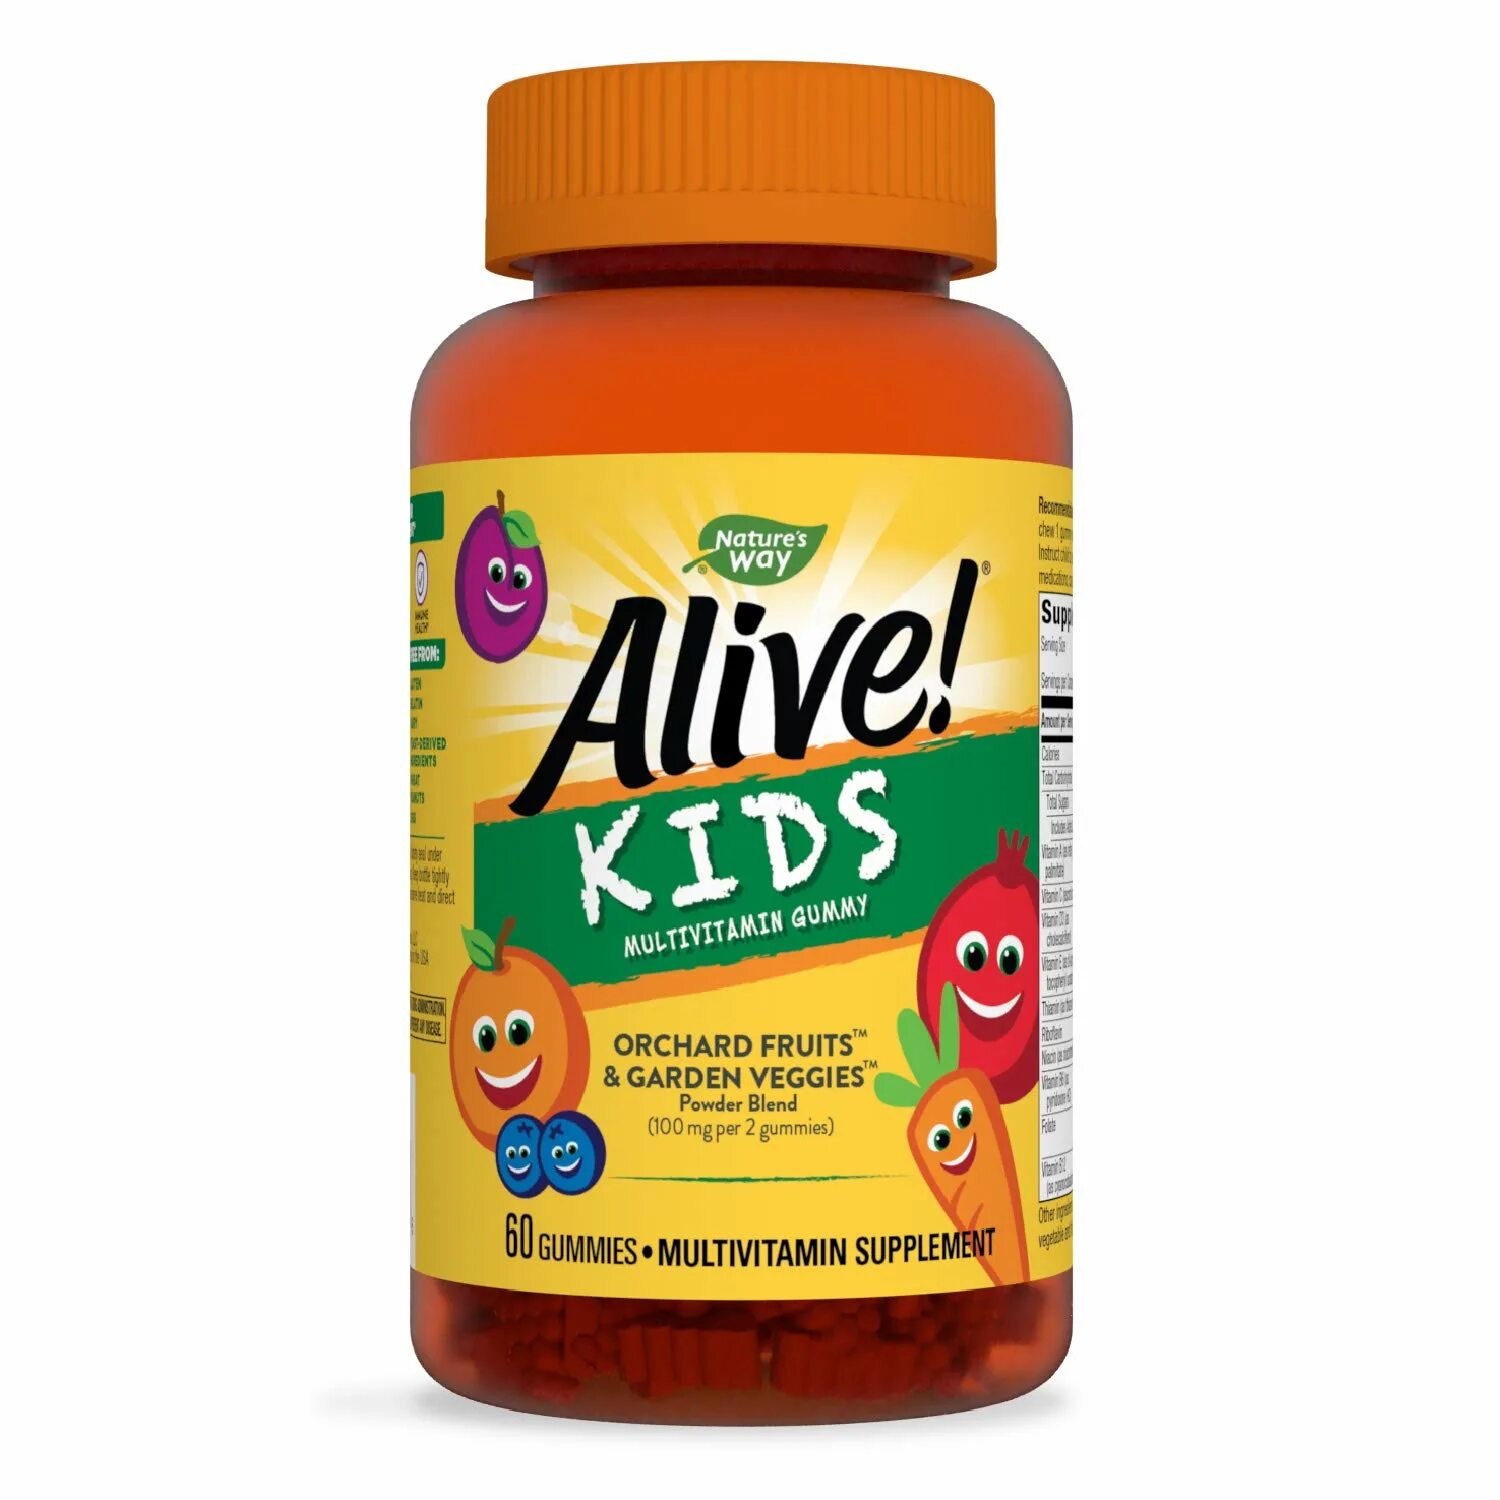 Мультивитамины Аливе. Nature's way, Alive Multivitamin. Alive Kids Multivitamin. Alive мультивитамины для детей.